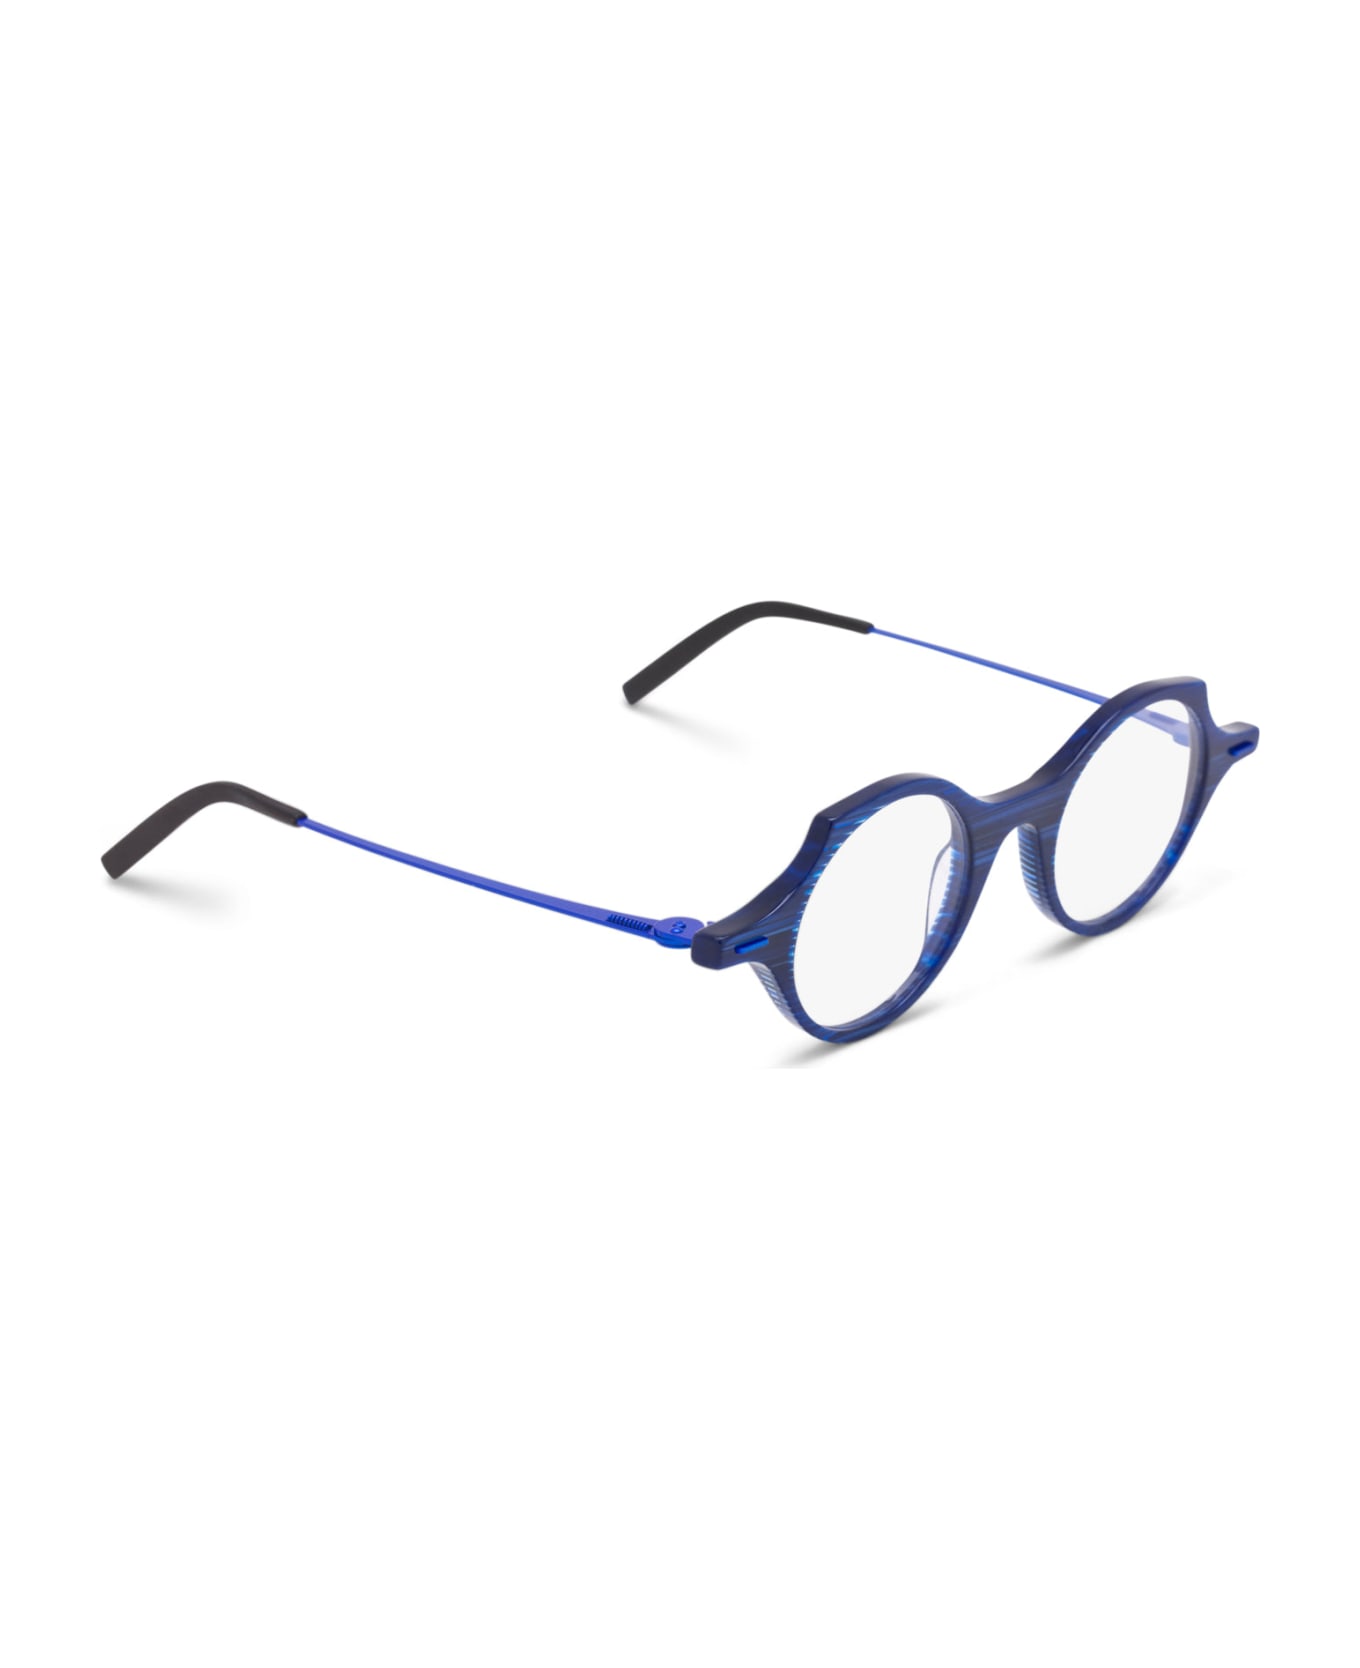 Theo Eyewear Patatas-9 Glasses - electric blue